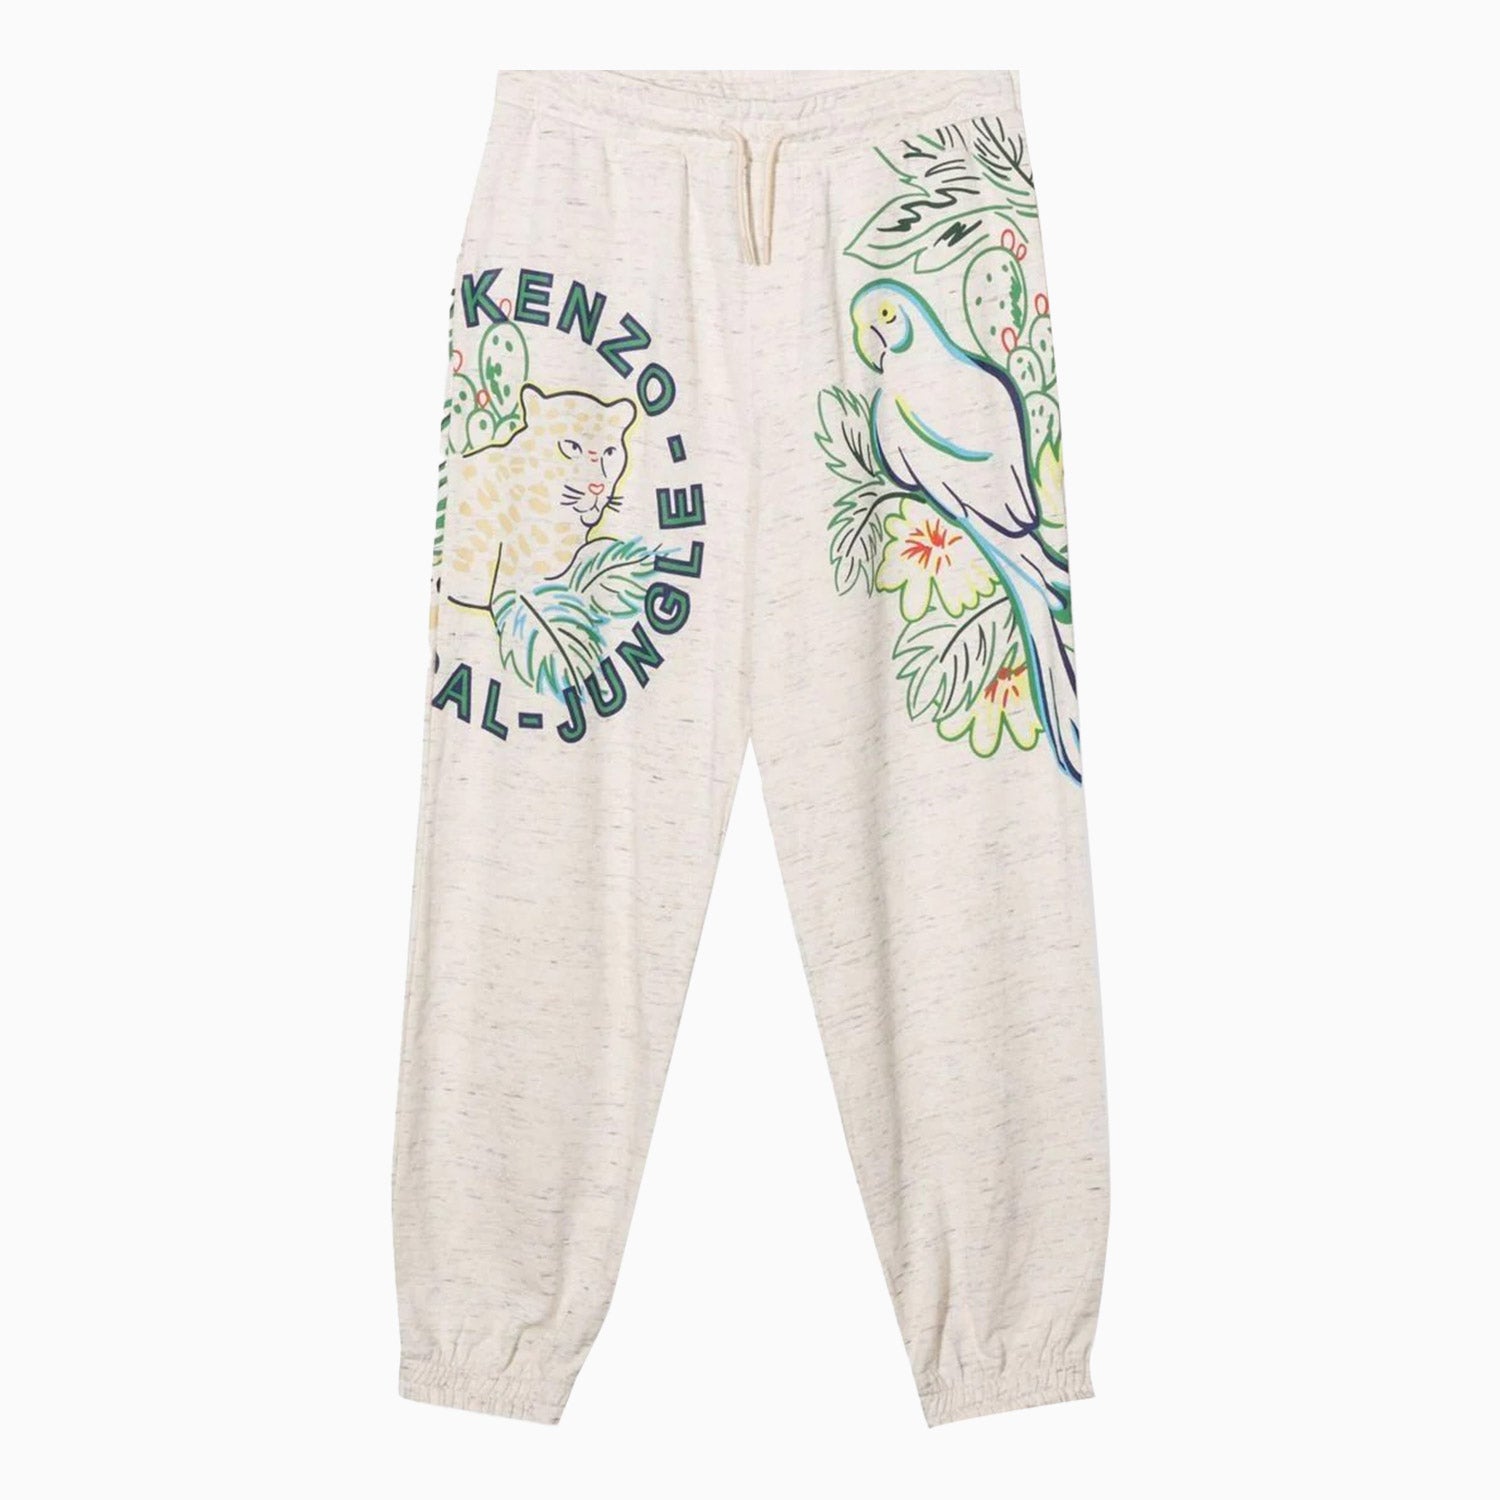 Kenzo Kid's Fleece Pant - Color: Off White - Kids Premium Clothing -